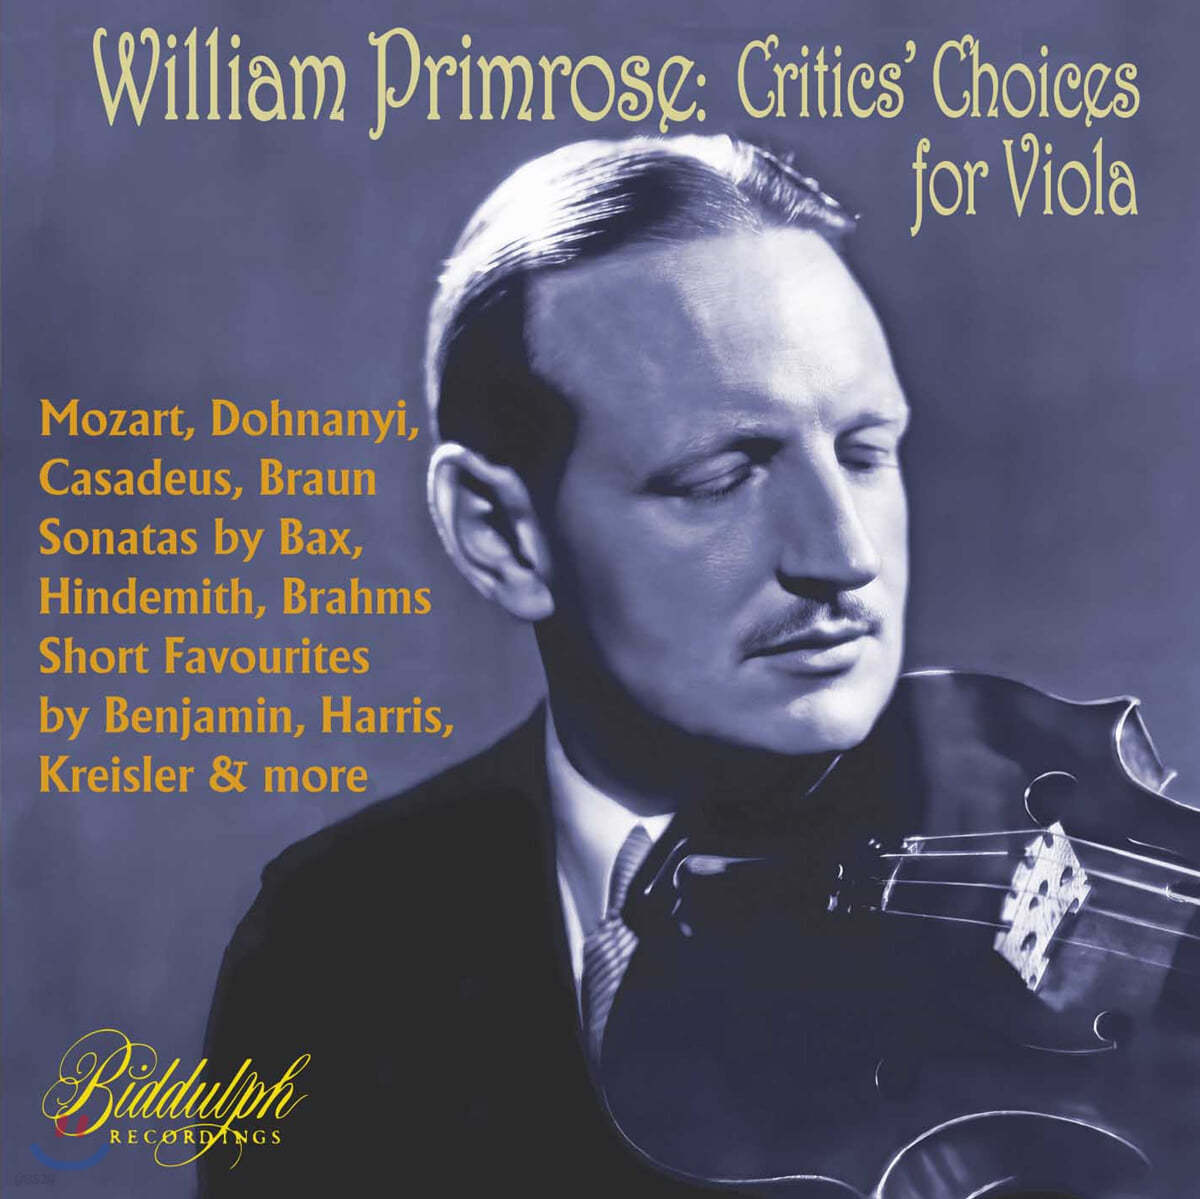 William Primrose 윌리엄 프림로즈 비올라 명연주집 (Critics' Choices for Viola - Selected Collector's recrodings 1938-47)